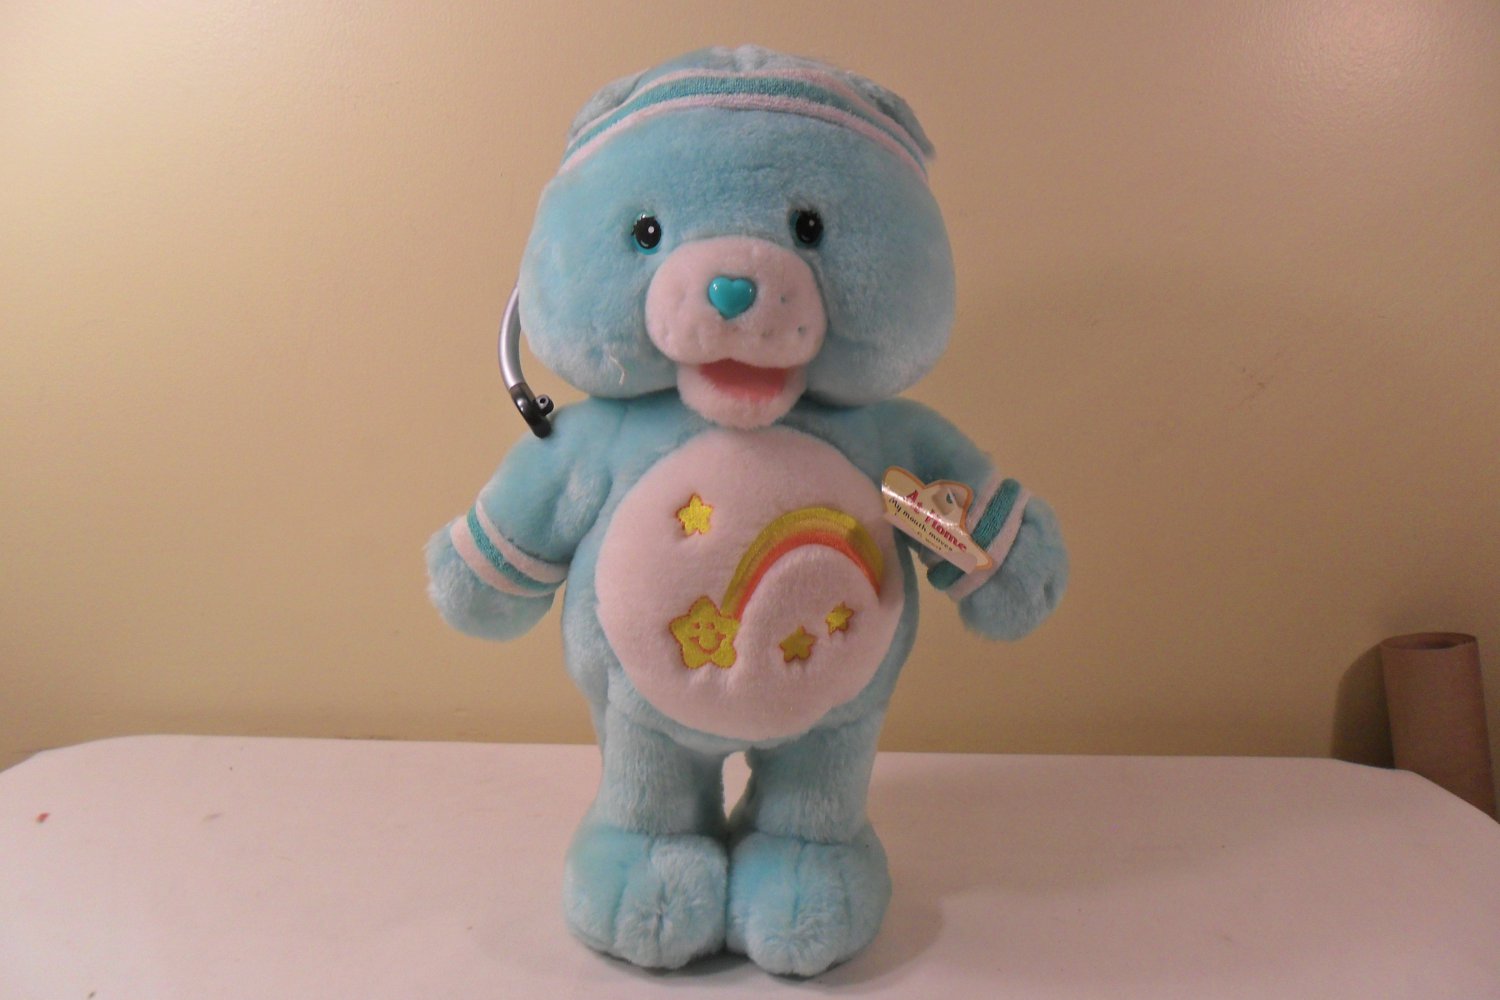 2004 Let's Get Physical Exercise Care Bear Wish Bear Talking Singing Plush Toy